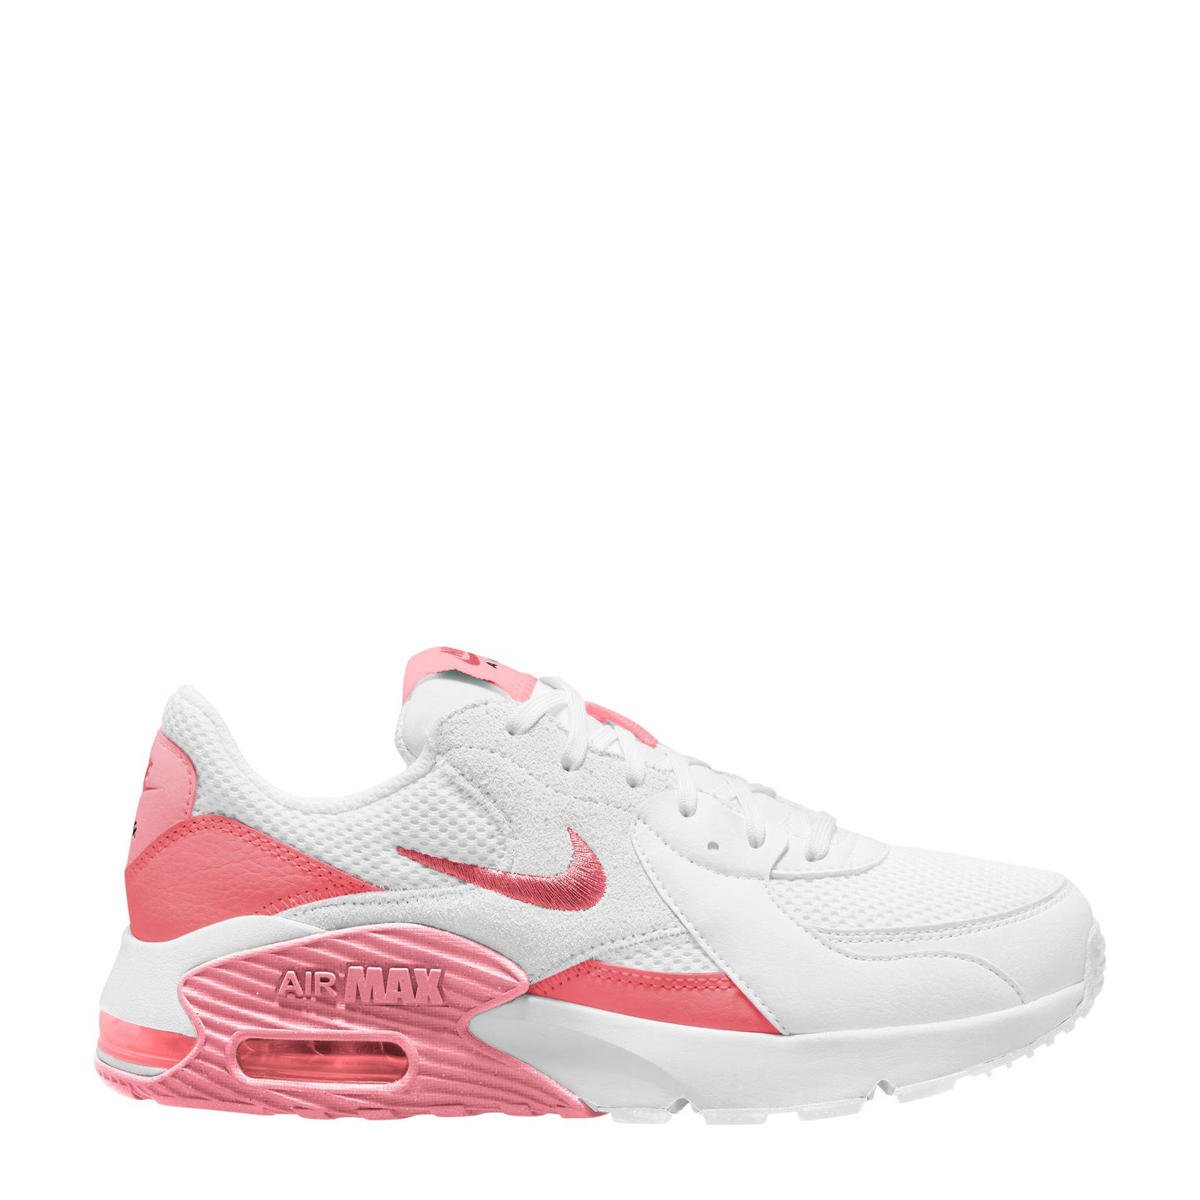 Vluchtig helder Huidige Nike Air Max Excee sneakers wit/roze | wehkamp